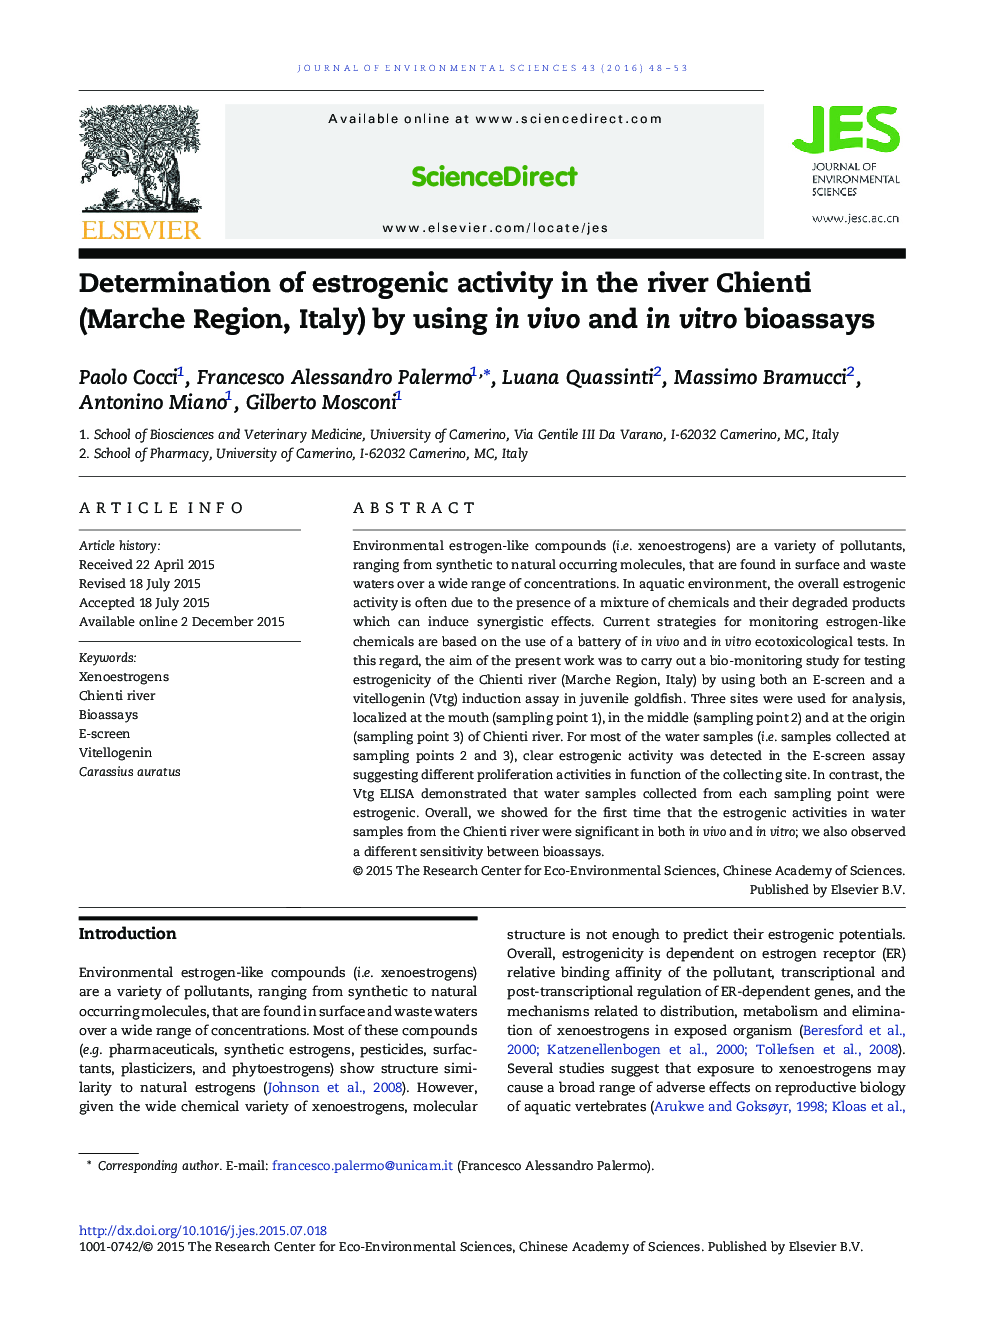 Determination of estrogenic activity in the river Chienti (Marche Region, Italy) by using in vivo and in vitro bioassays